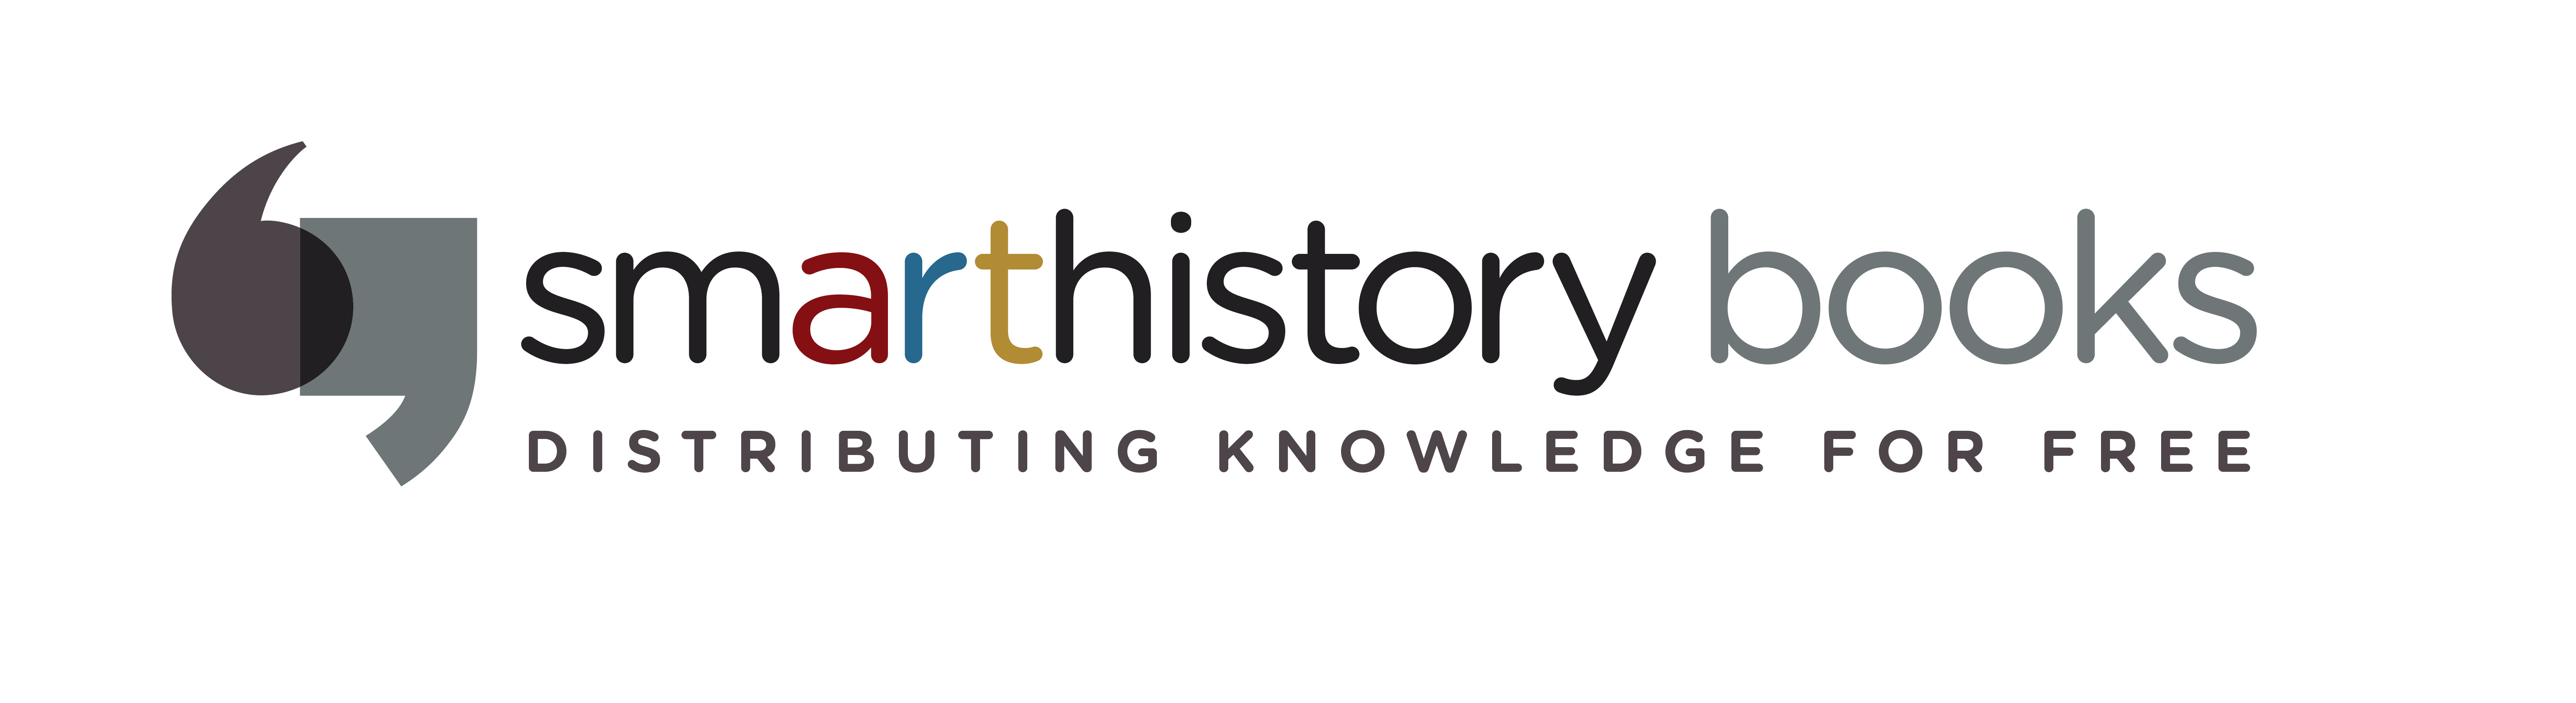 smarthistory books logo